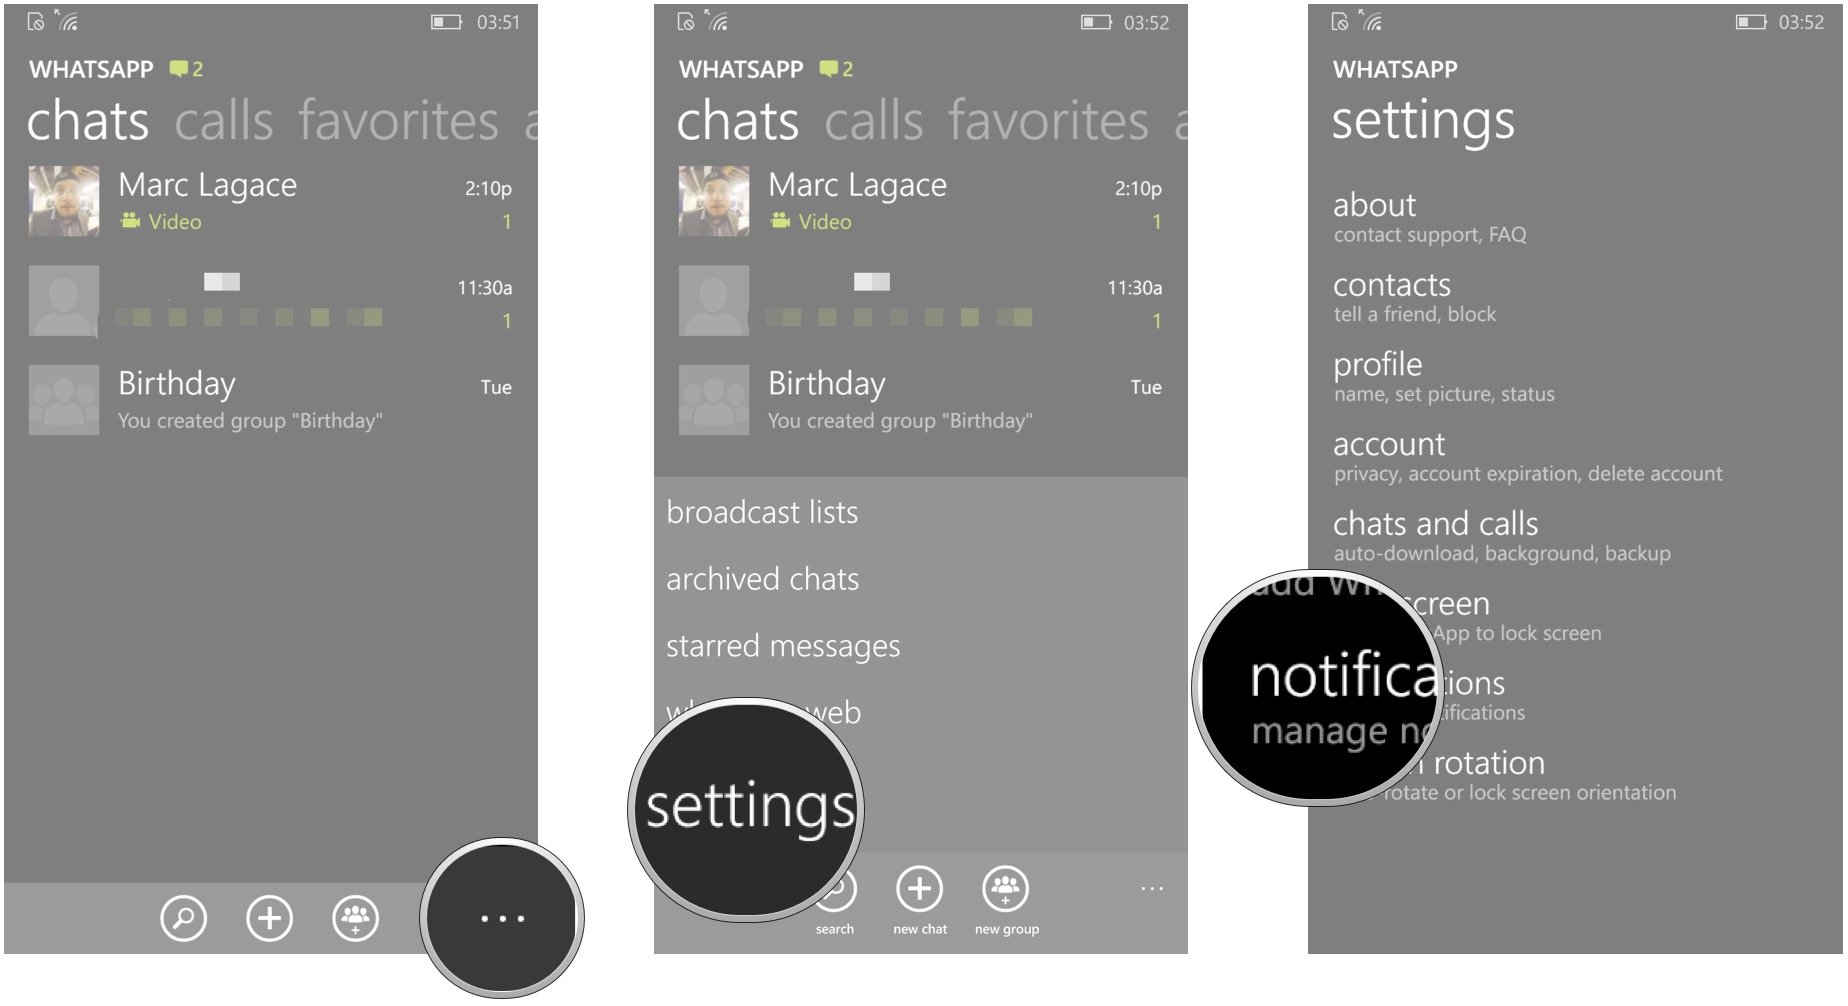 Launch WhatsApp, tap menu, settings, notifications